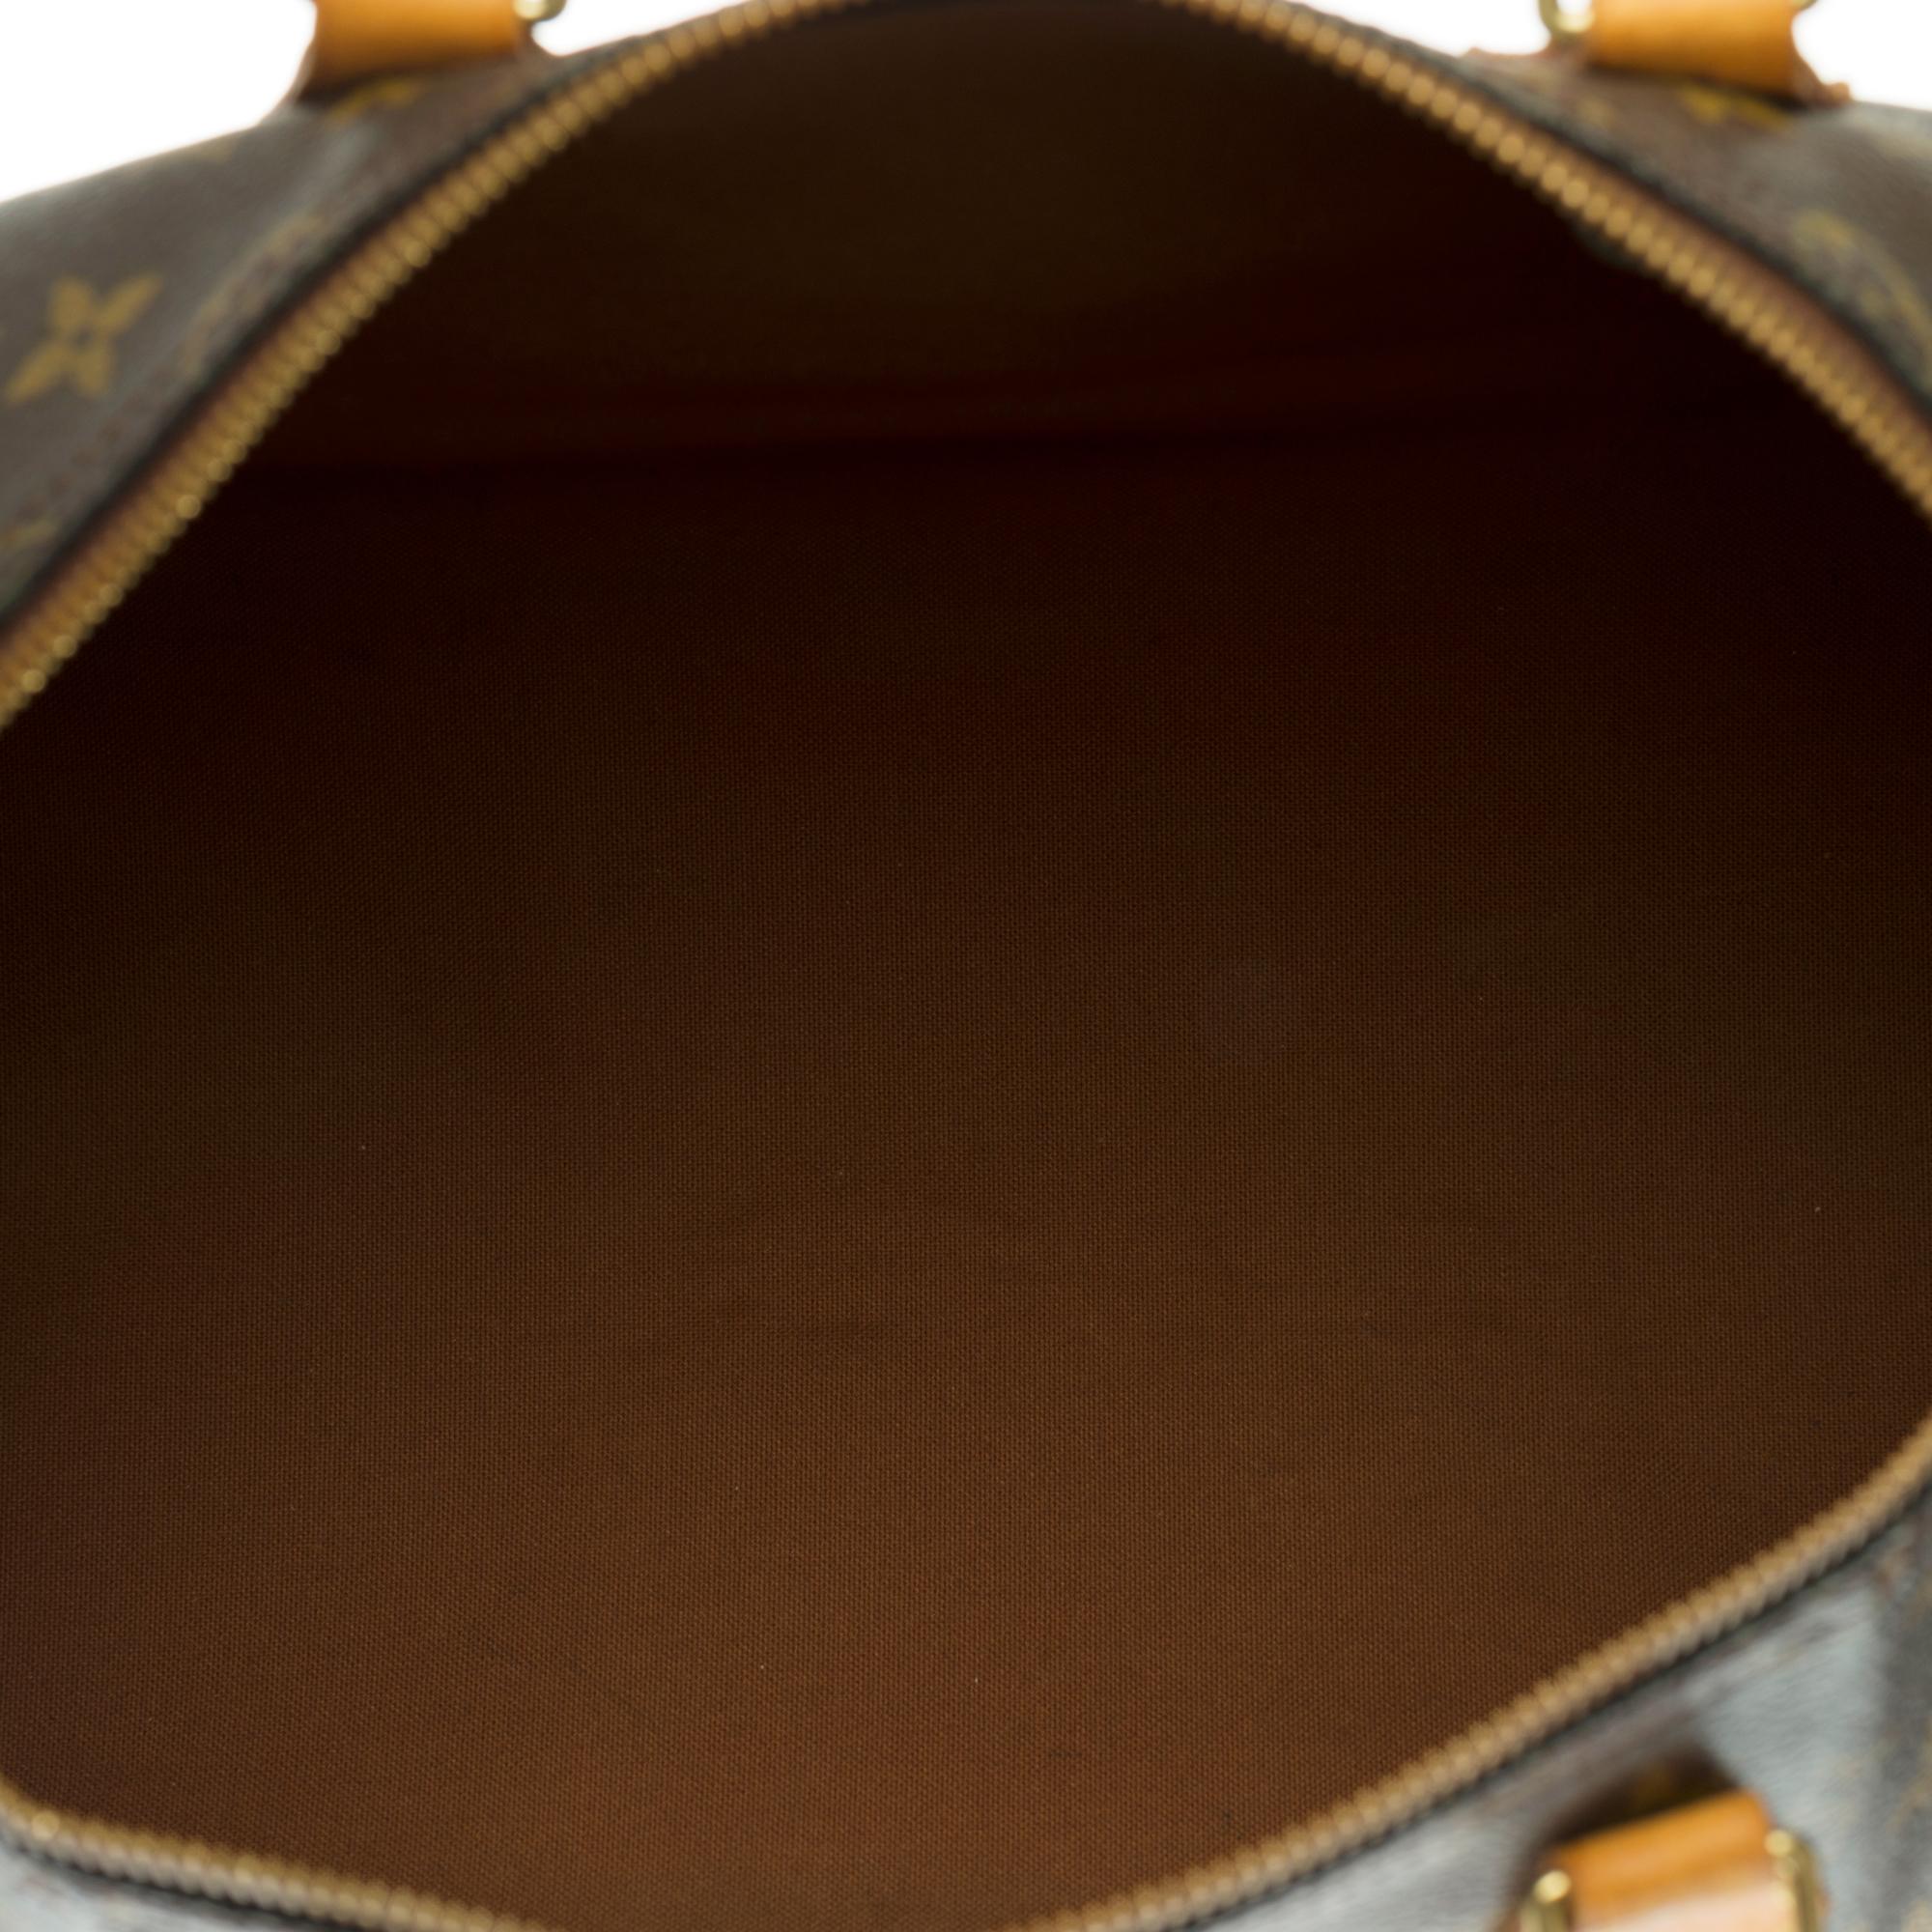 Customized Louis Vuitton Speedy 35 handbag in Monogram canvas 2